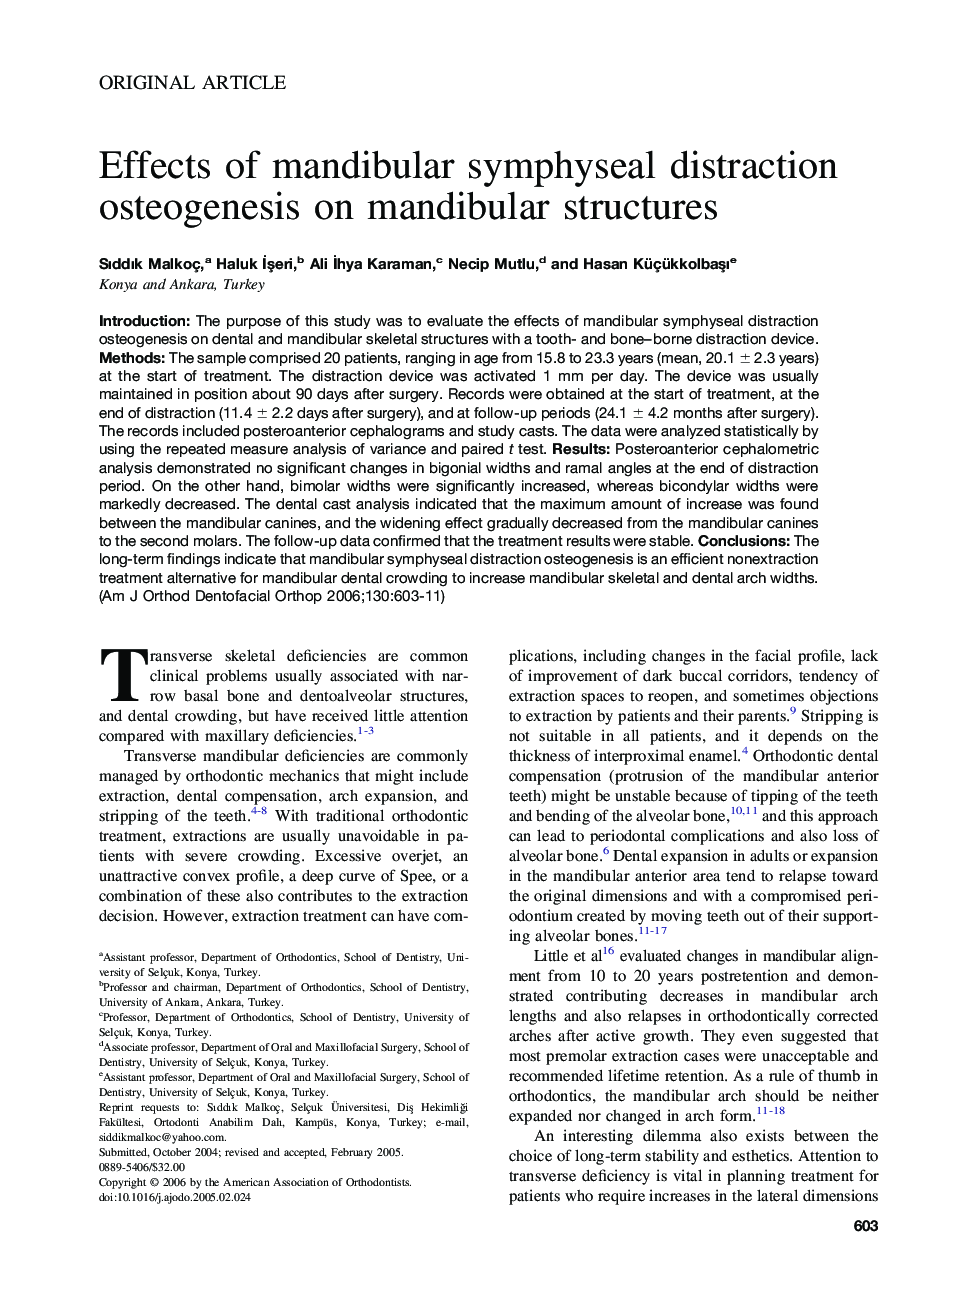 Effects of mandibular symphyseal distraction osteogenesis on mandibular structures